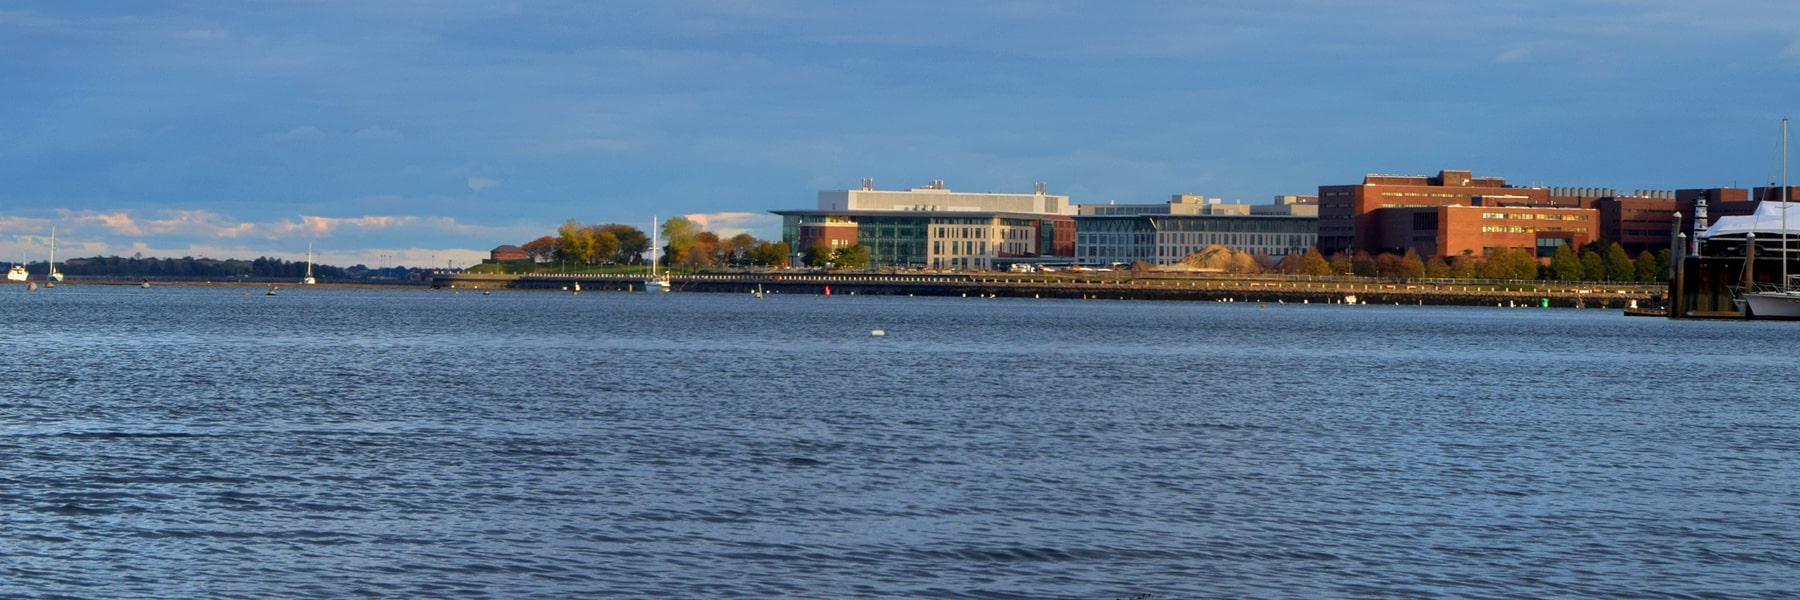 view of UMass Boston campus from Boston Harbor